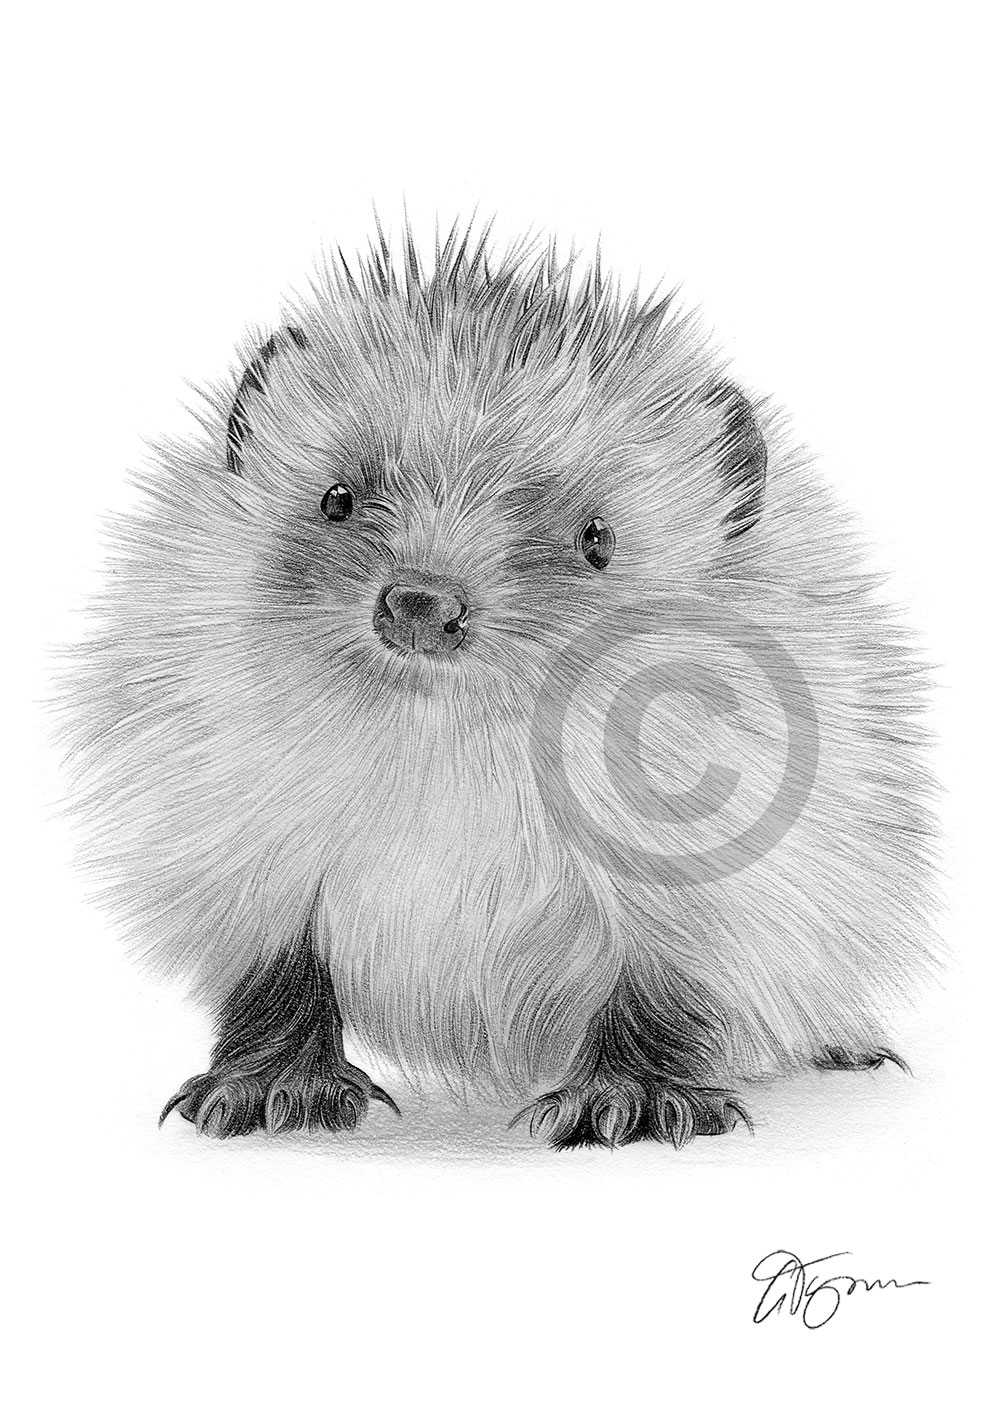 Pencil drawing of a baby hedgehog by artist Gary Tymon